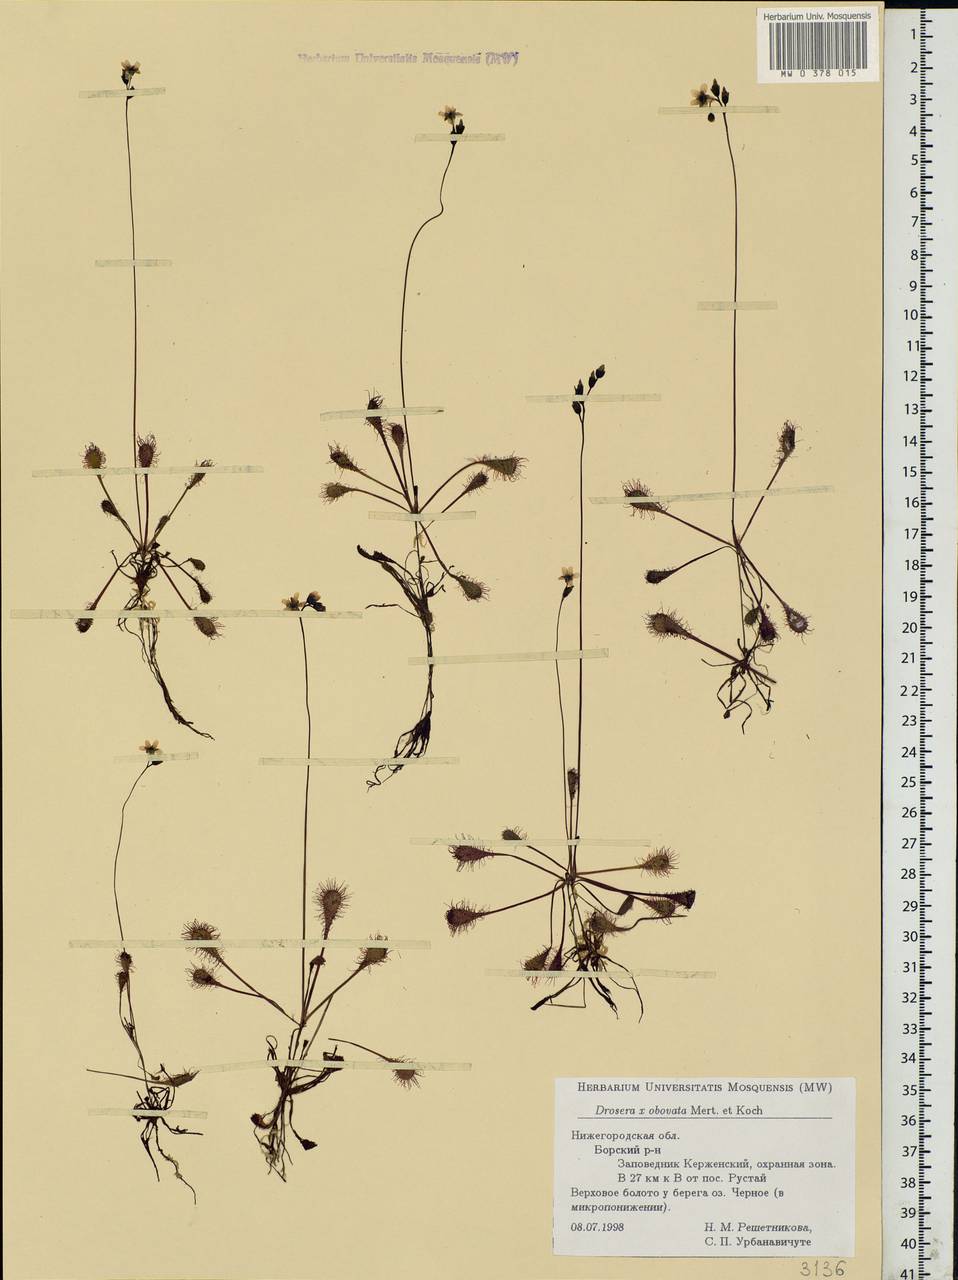 Drosera ×obovata Mert. & W. D. J. Koch, Eastern Europe, Volga-Kama region (E7) (Russia)